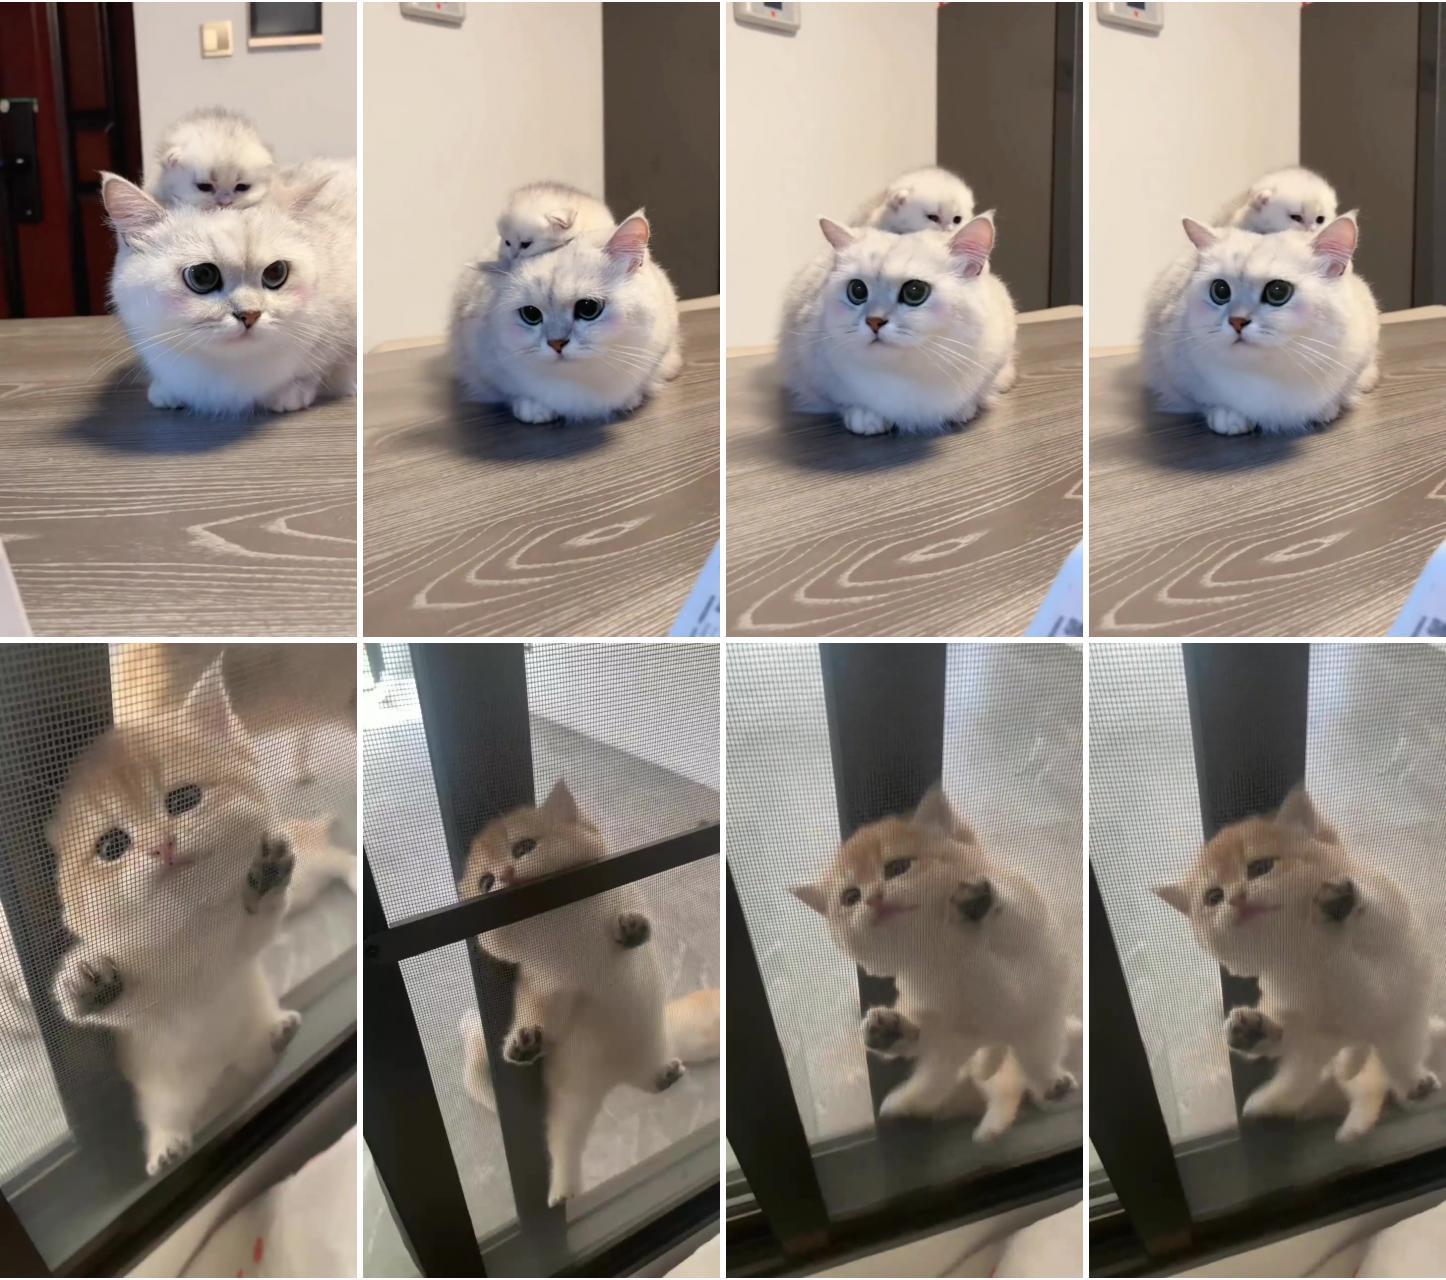 Cue white cat and kitten video ; cute little kittens